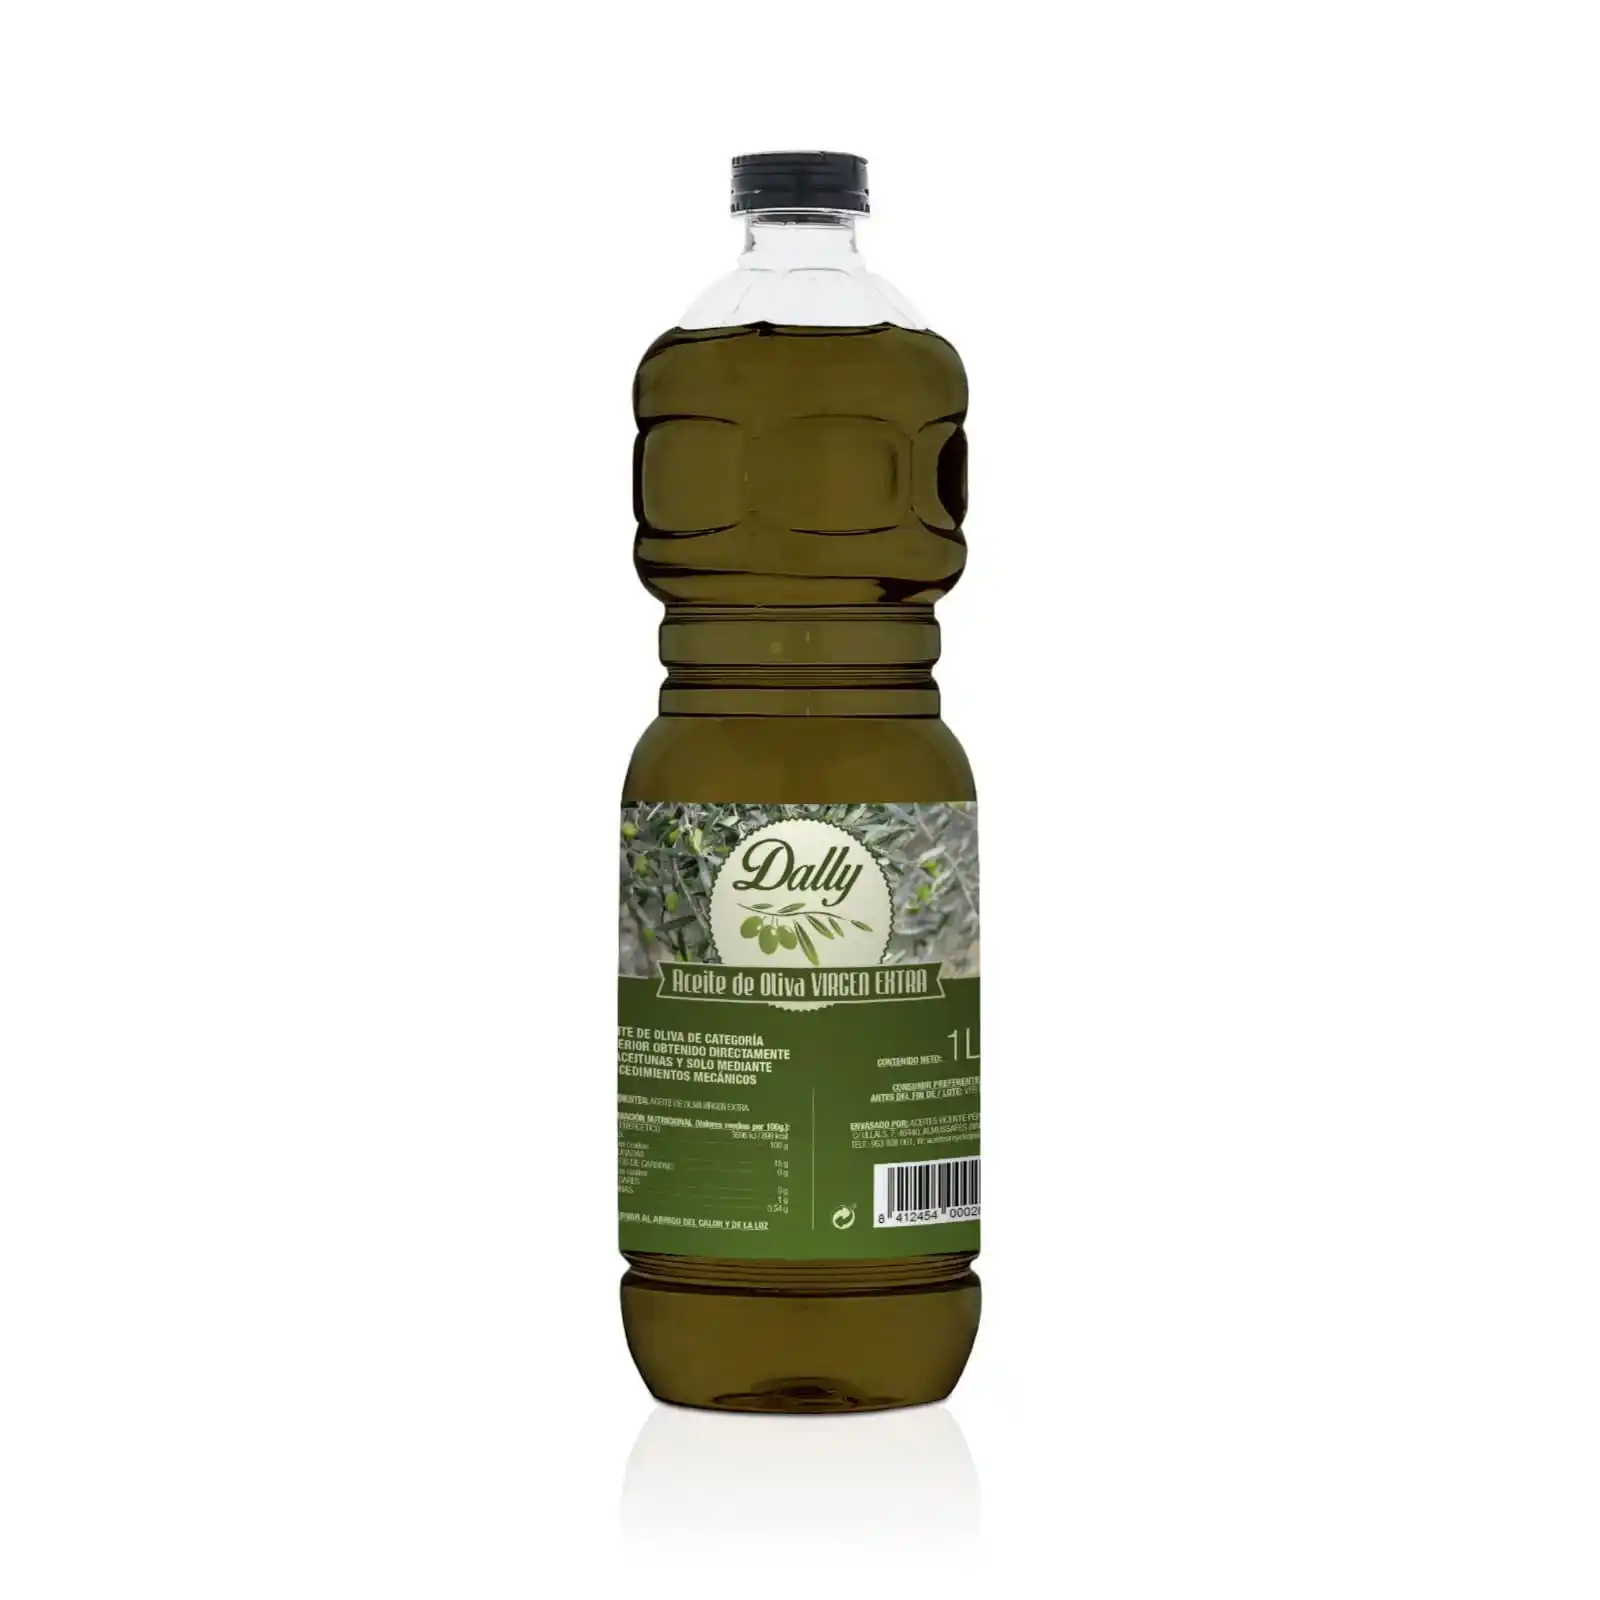 Chief-aceite de oliva virgen extra prensado en frío, remium, ody, ottle, 100 N